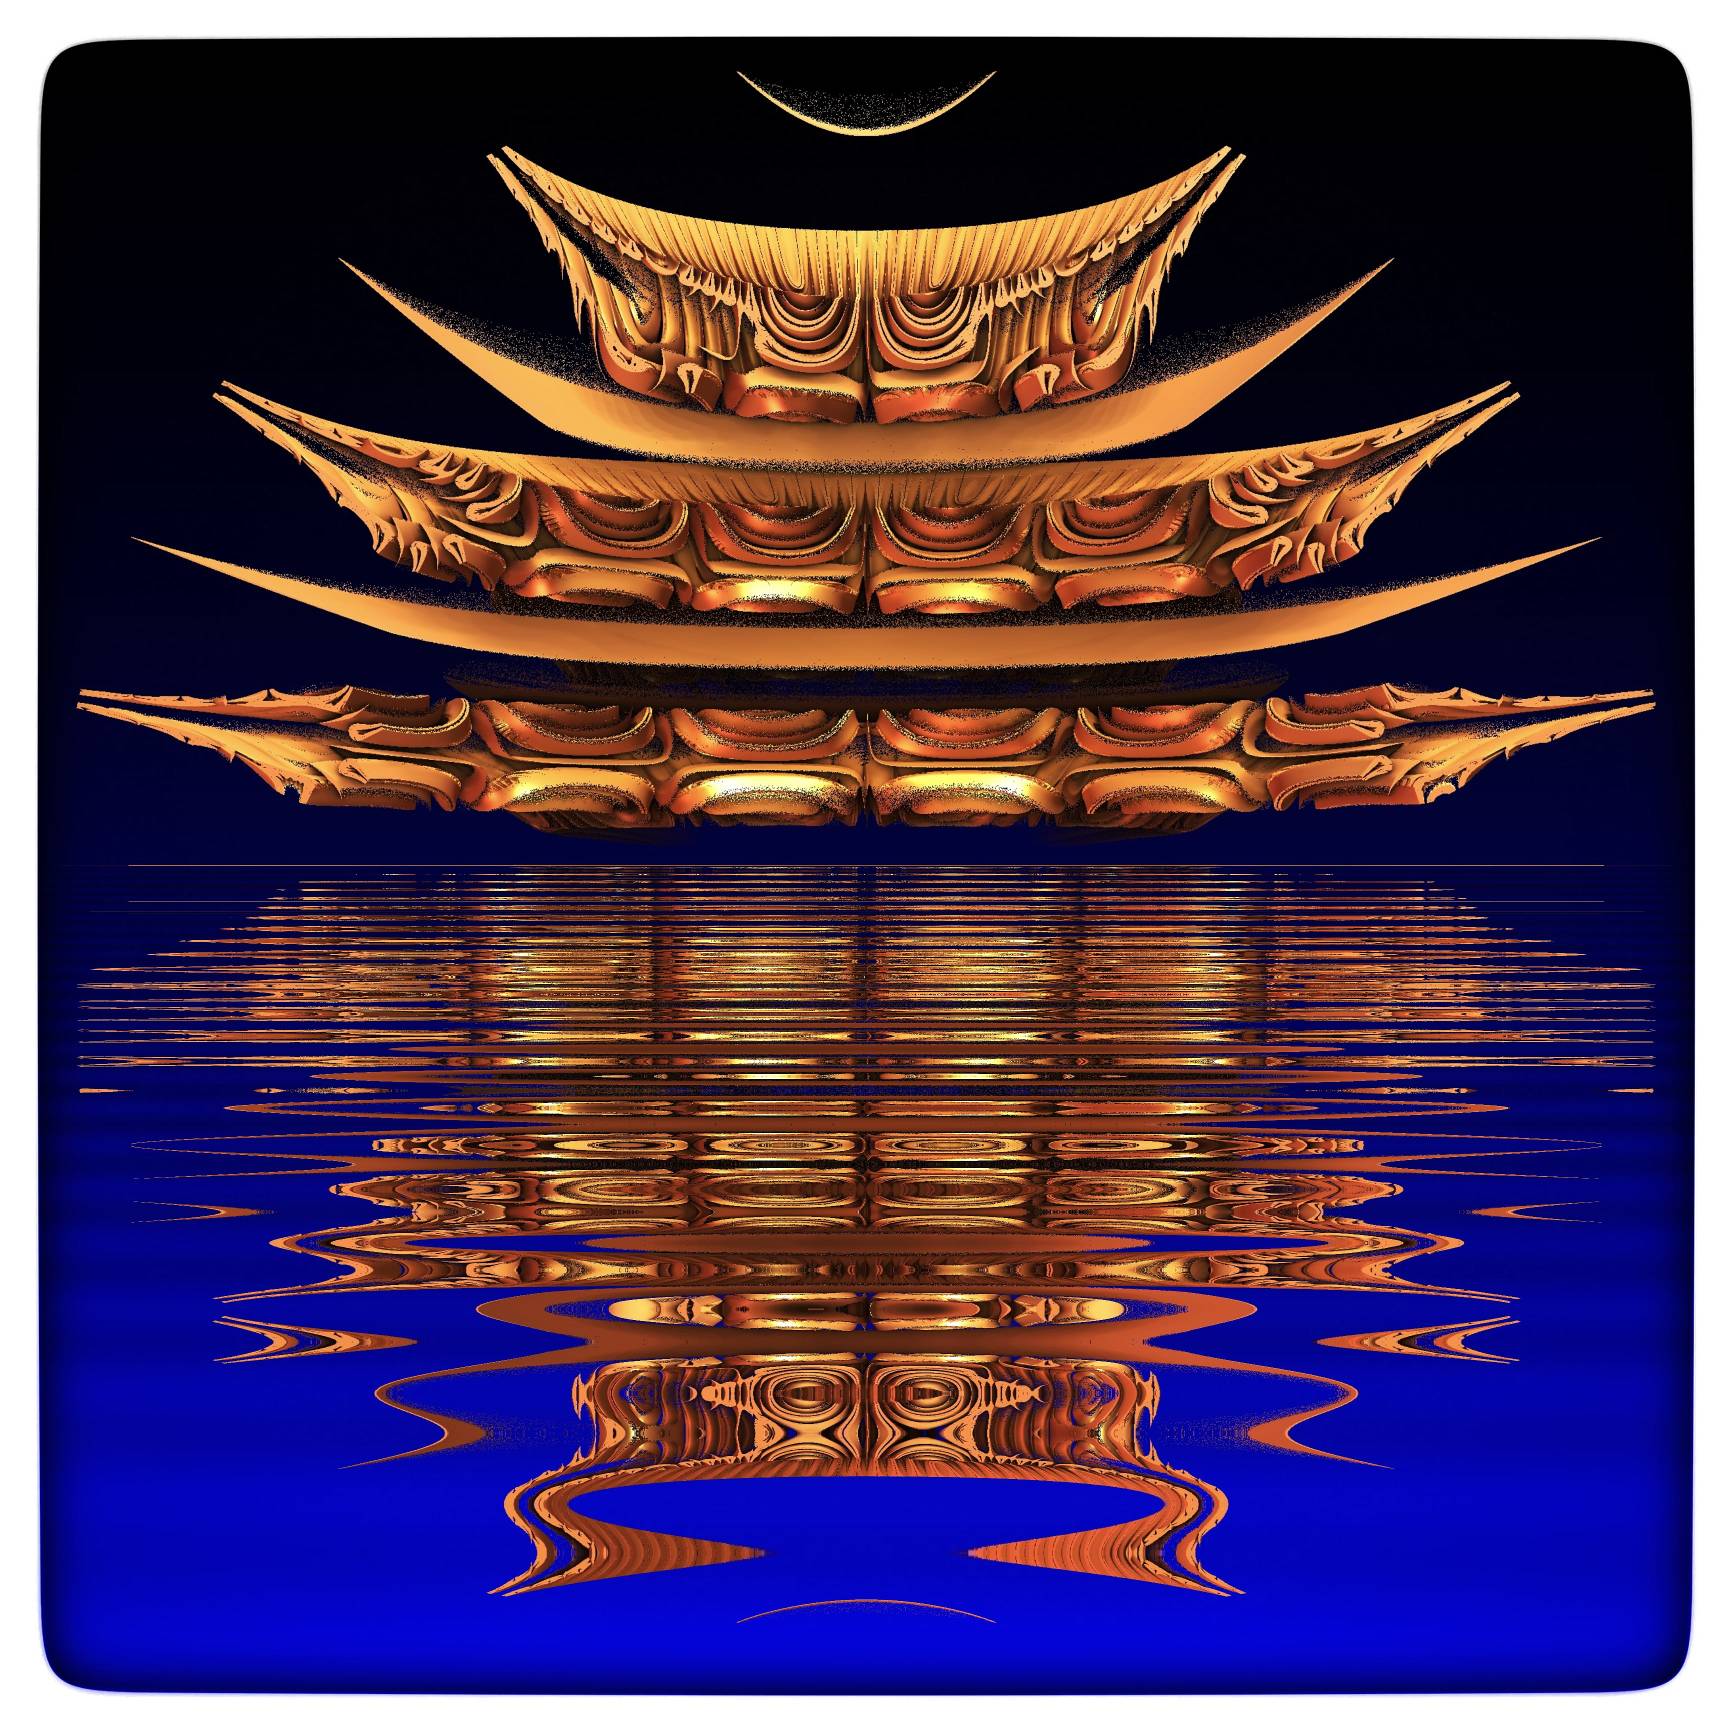 MineCraft Chinese Octagon Pagoda by Thasmerfyone on DeviantArt